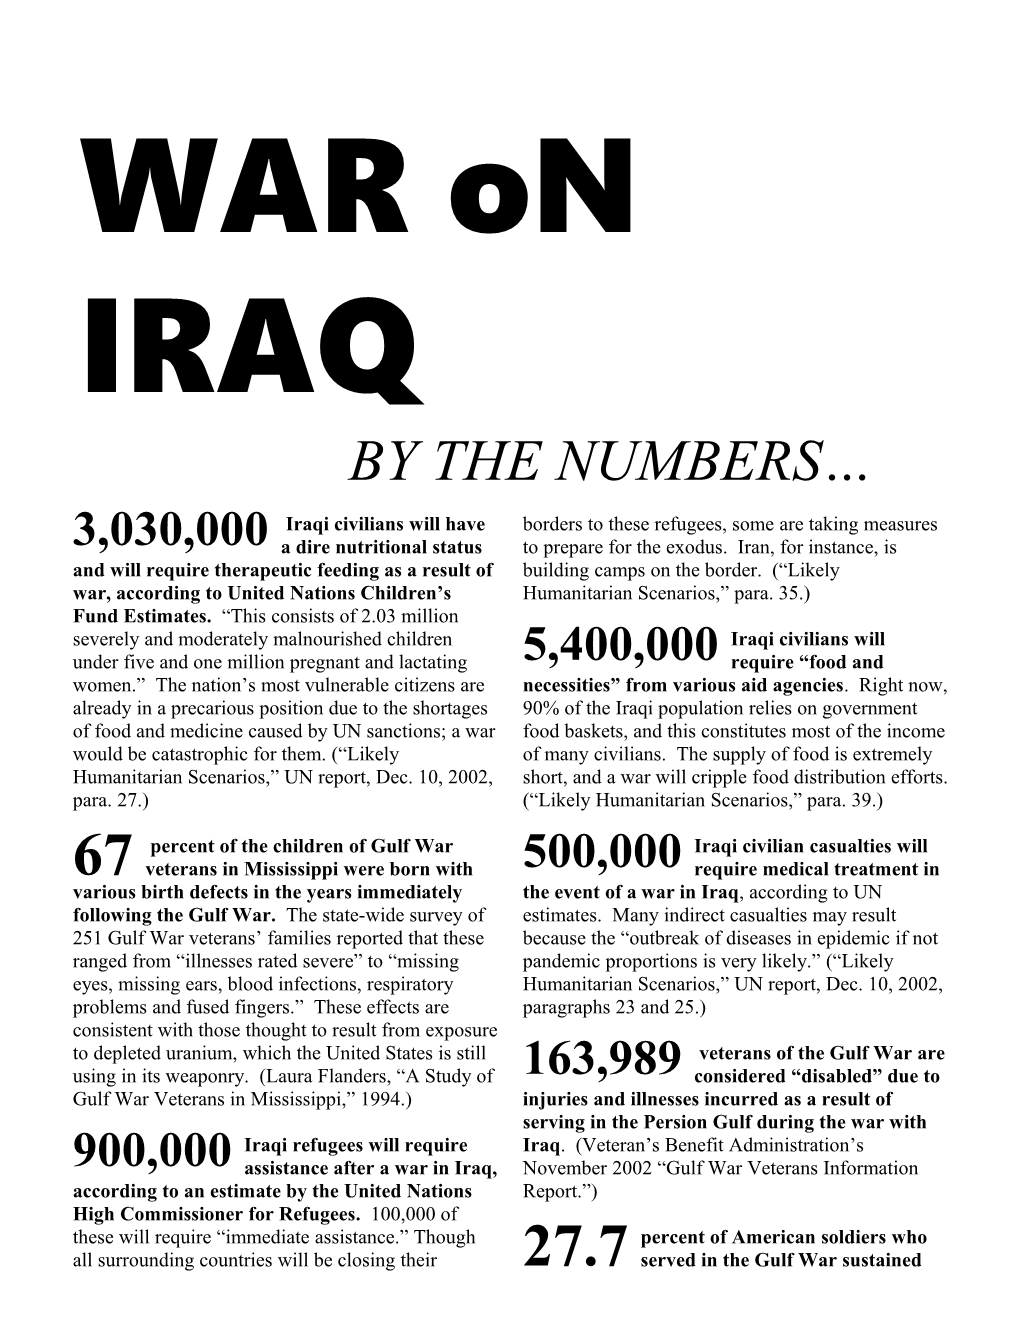 War in Iraq